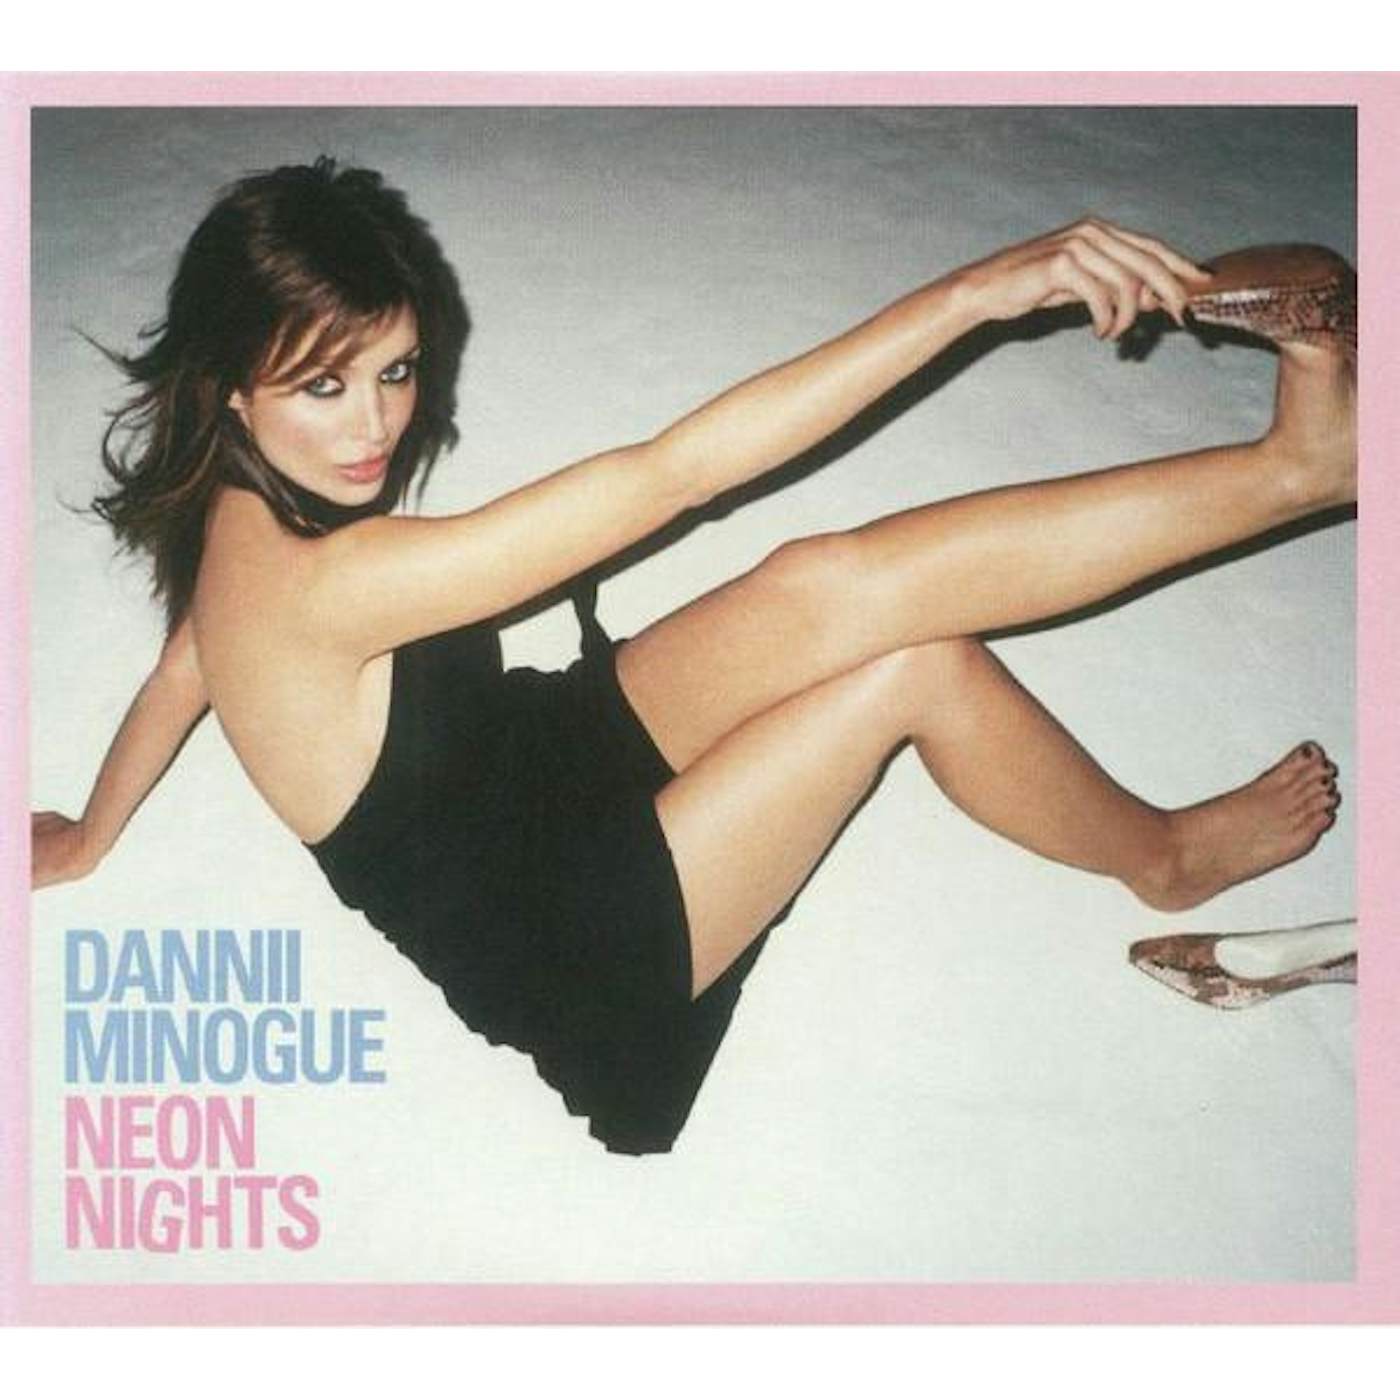 Dannii Minogue NEON NIGHTS CD